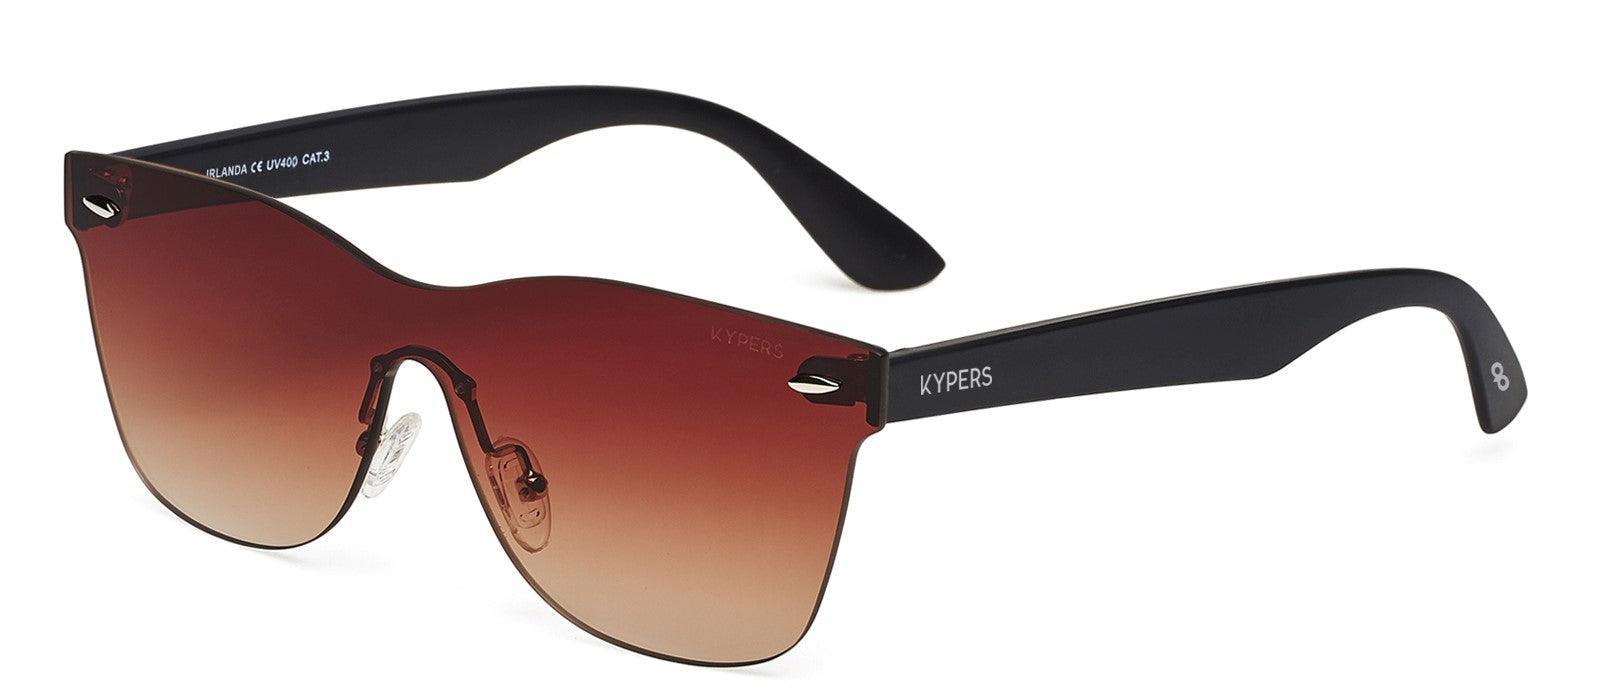 KYPERS sunglasses model IRLANDA IR002 with black frame and gradient brown & blue lens